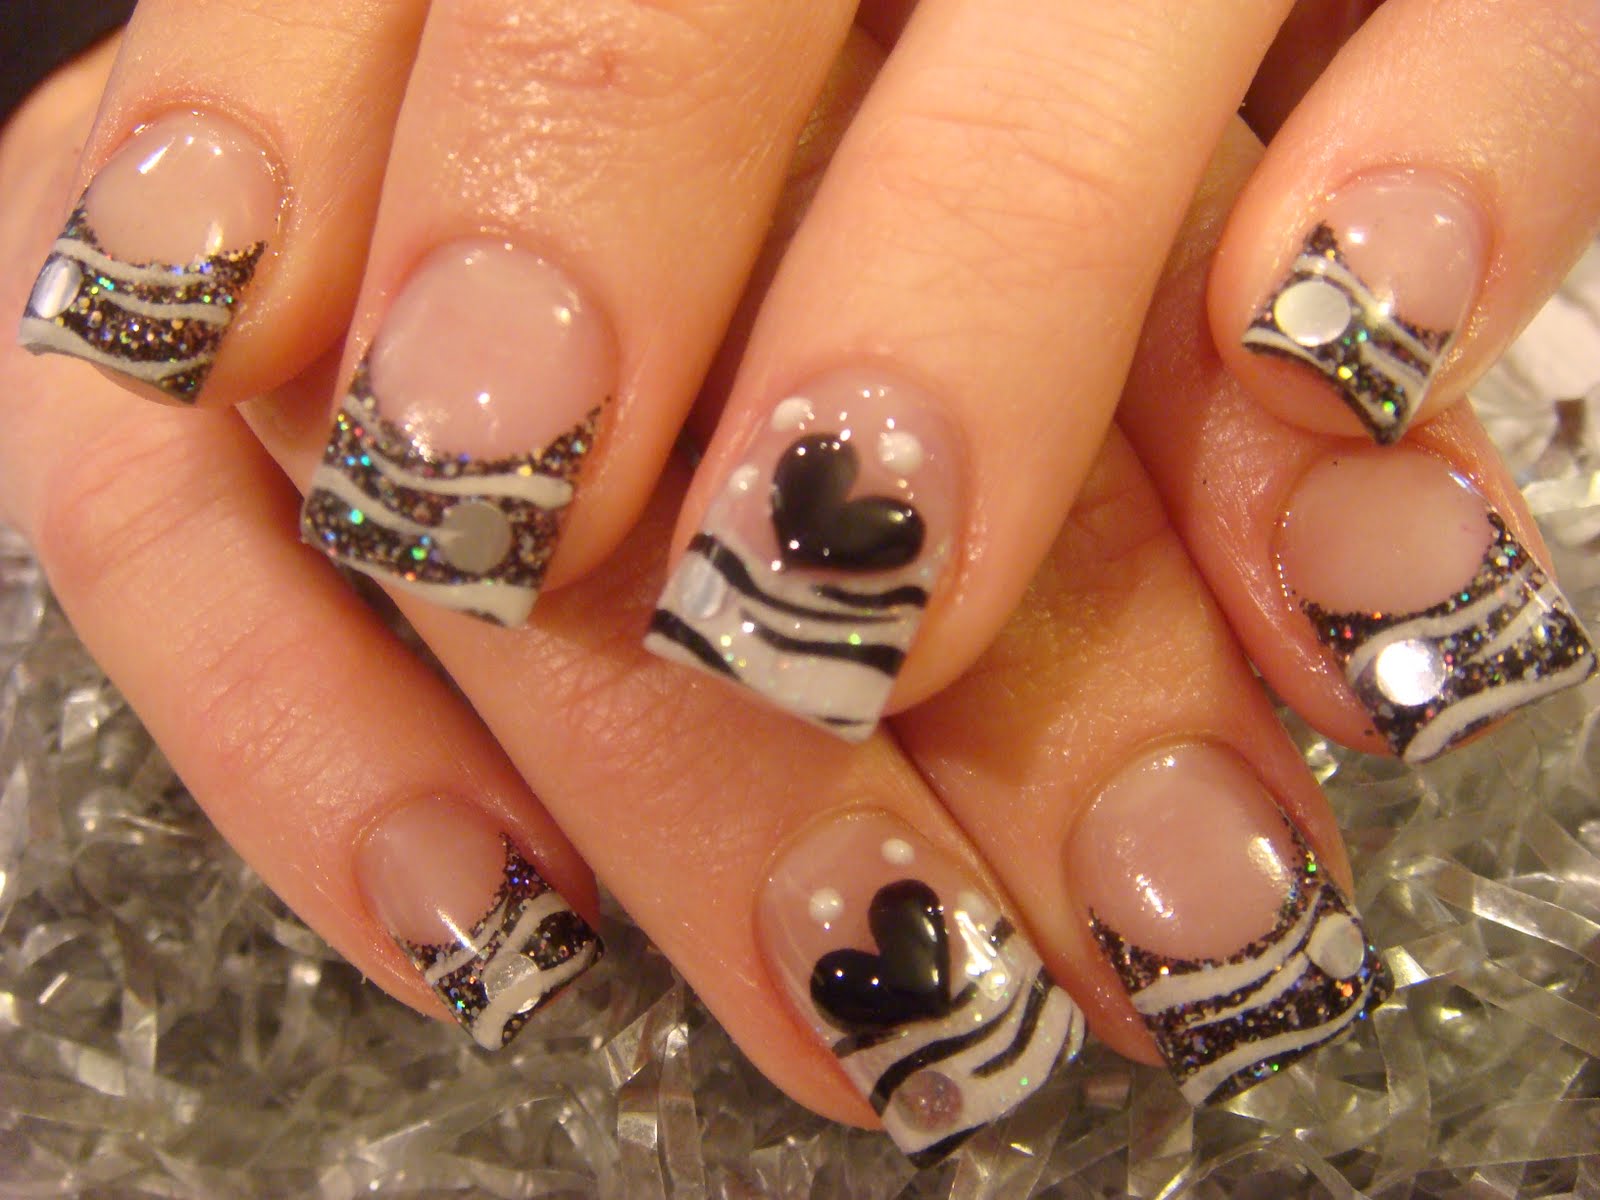 queen of hearts nail design